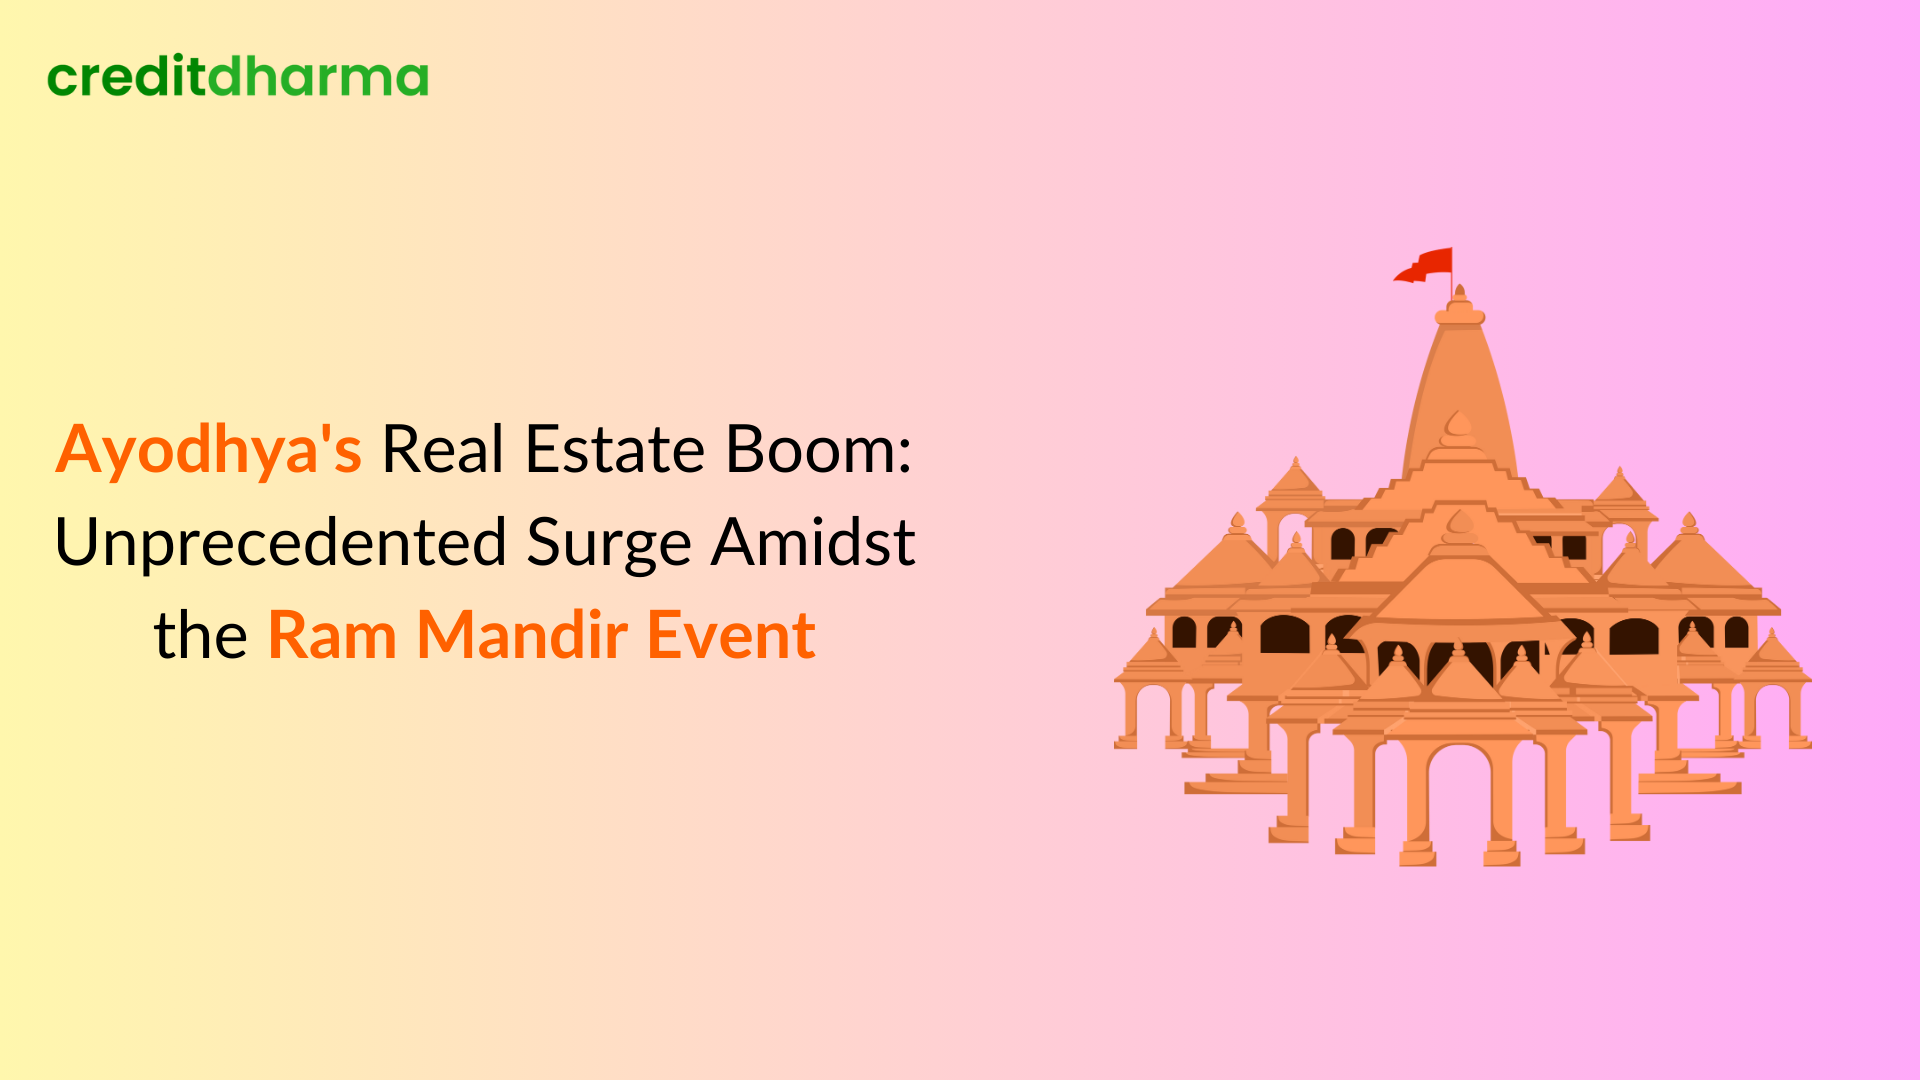 Ayodhya's Real Estate Boom: Unprecedented Surge Amidst the Ram Mandir Event